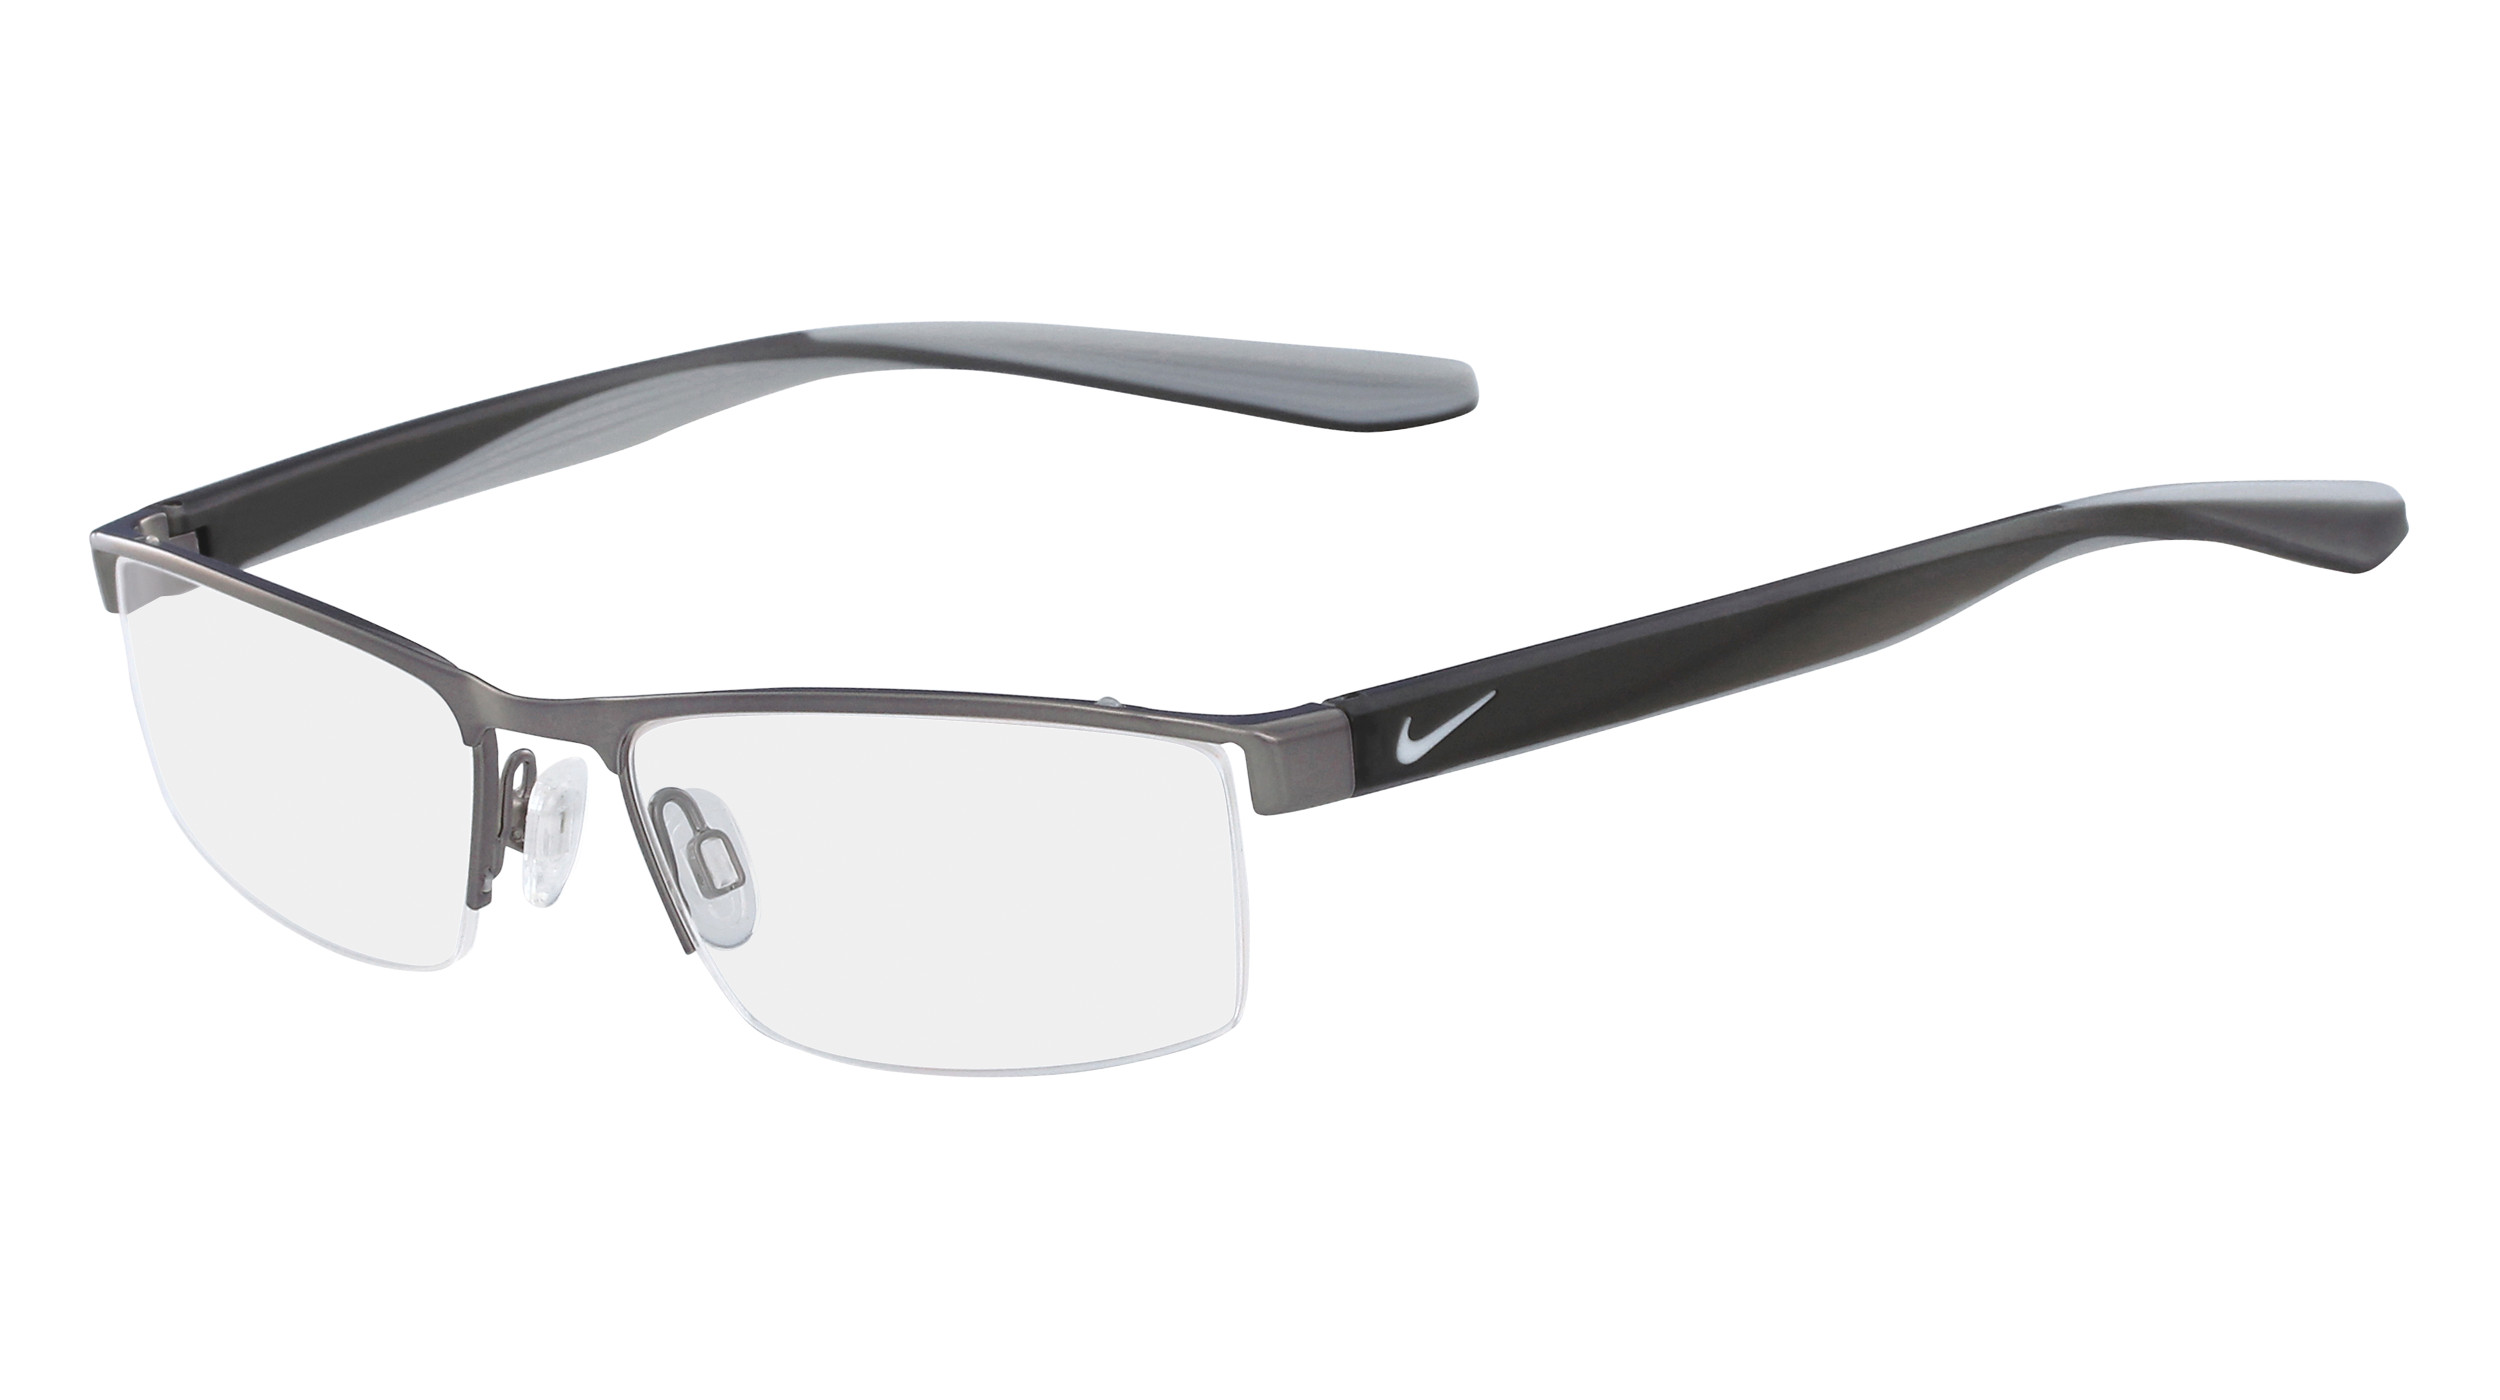 Nike Nike 8173 Eyeglasses Nike Authorized Retailer Coolframesca